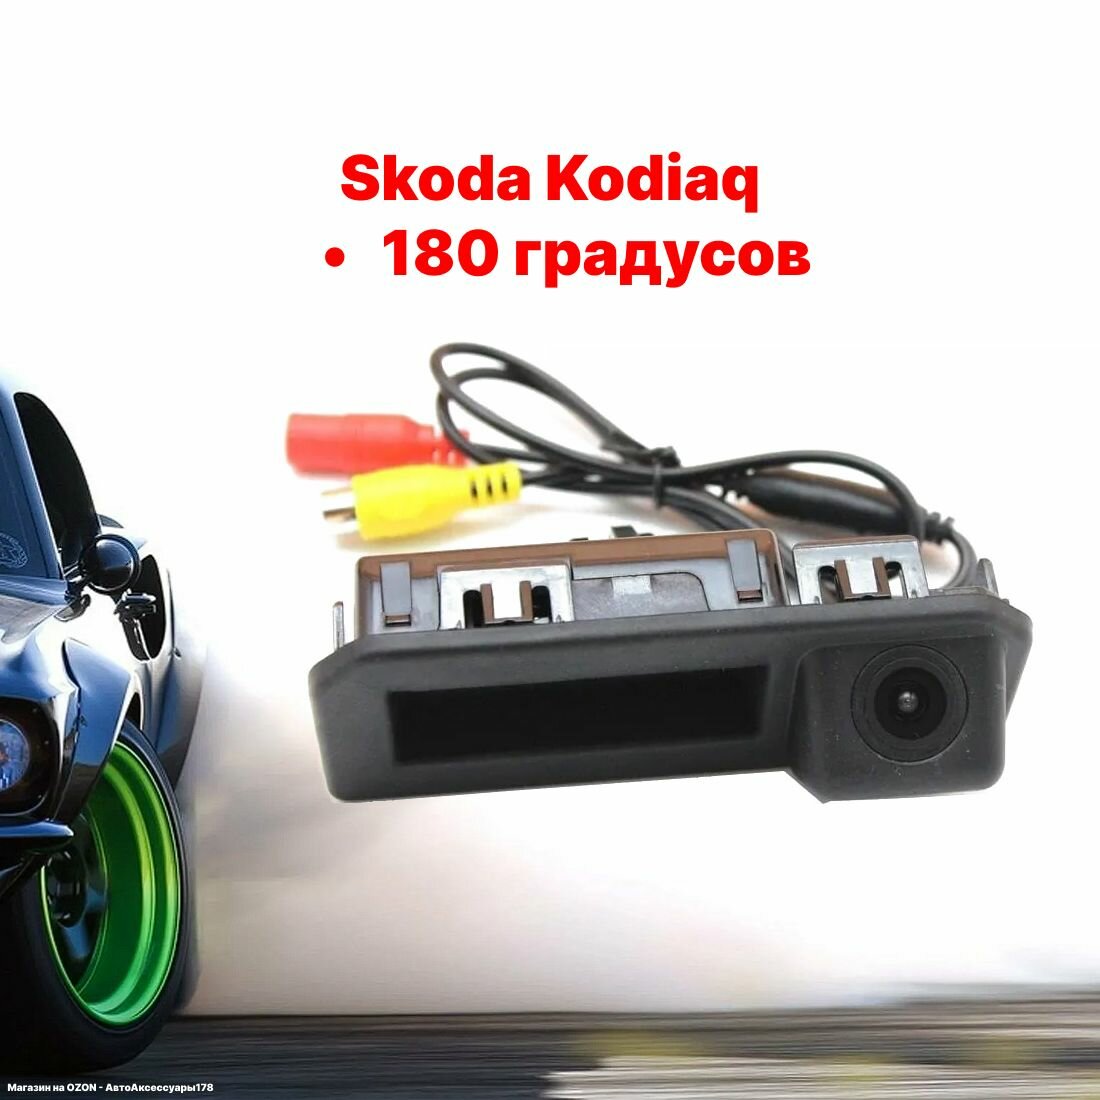 Камера заднего вида в ручку багажника Шкода кодиак - 180 градусов (Skoda Kodiaq)